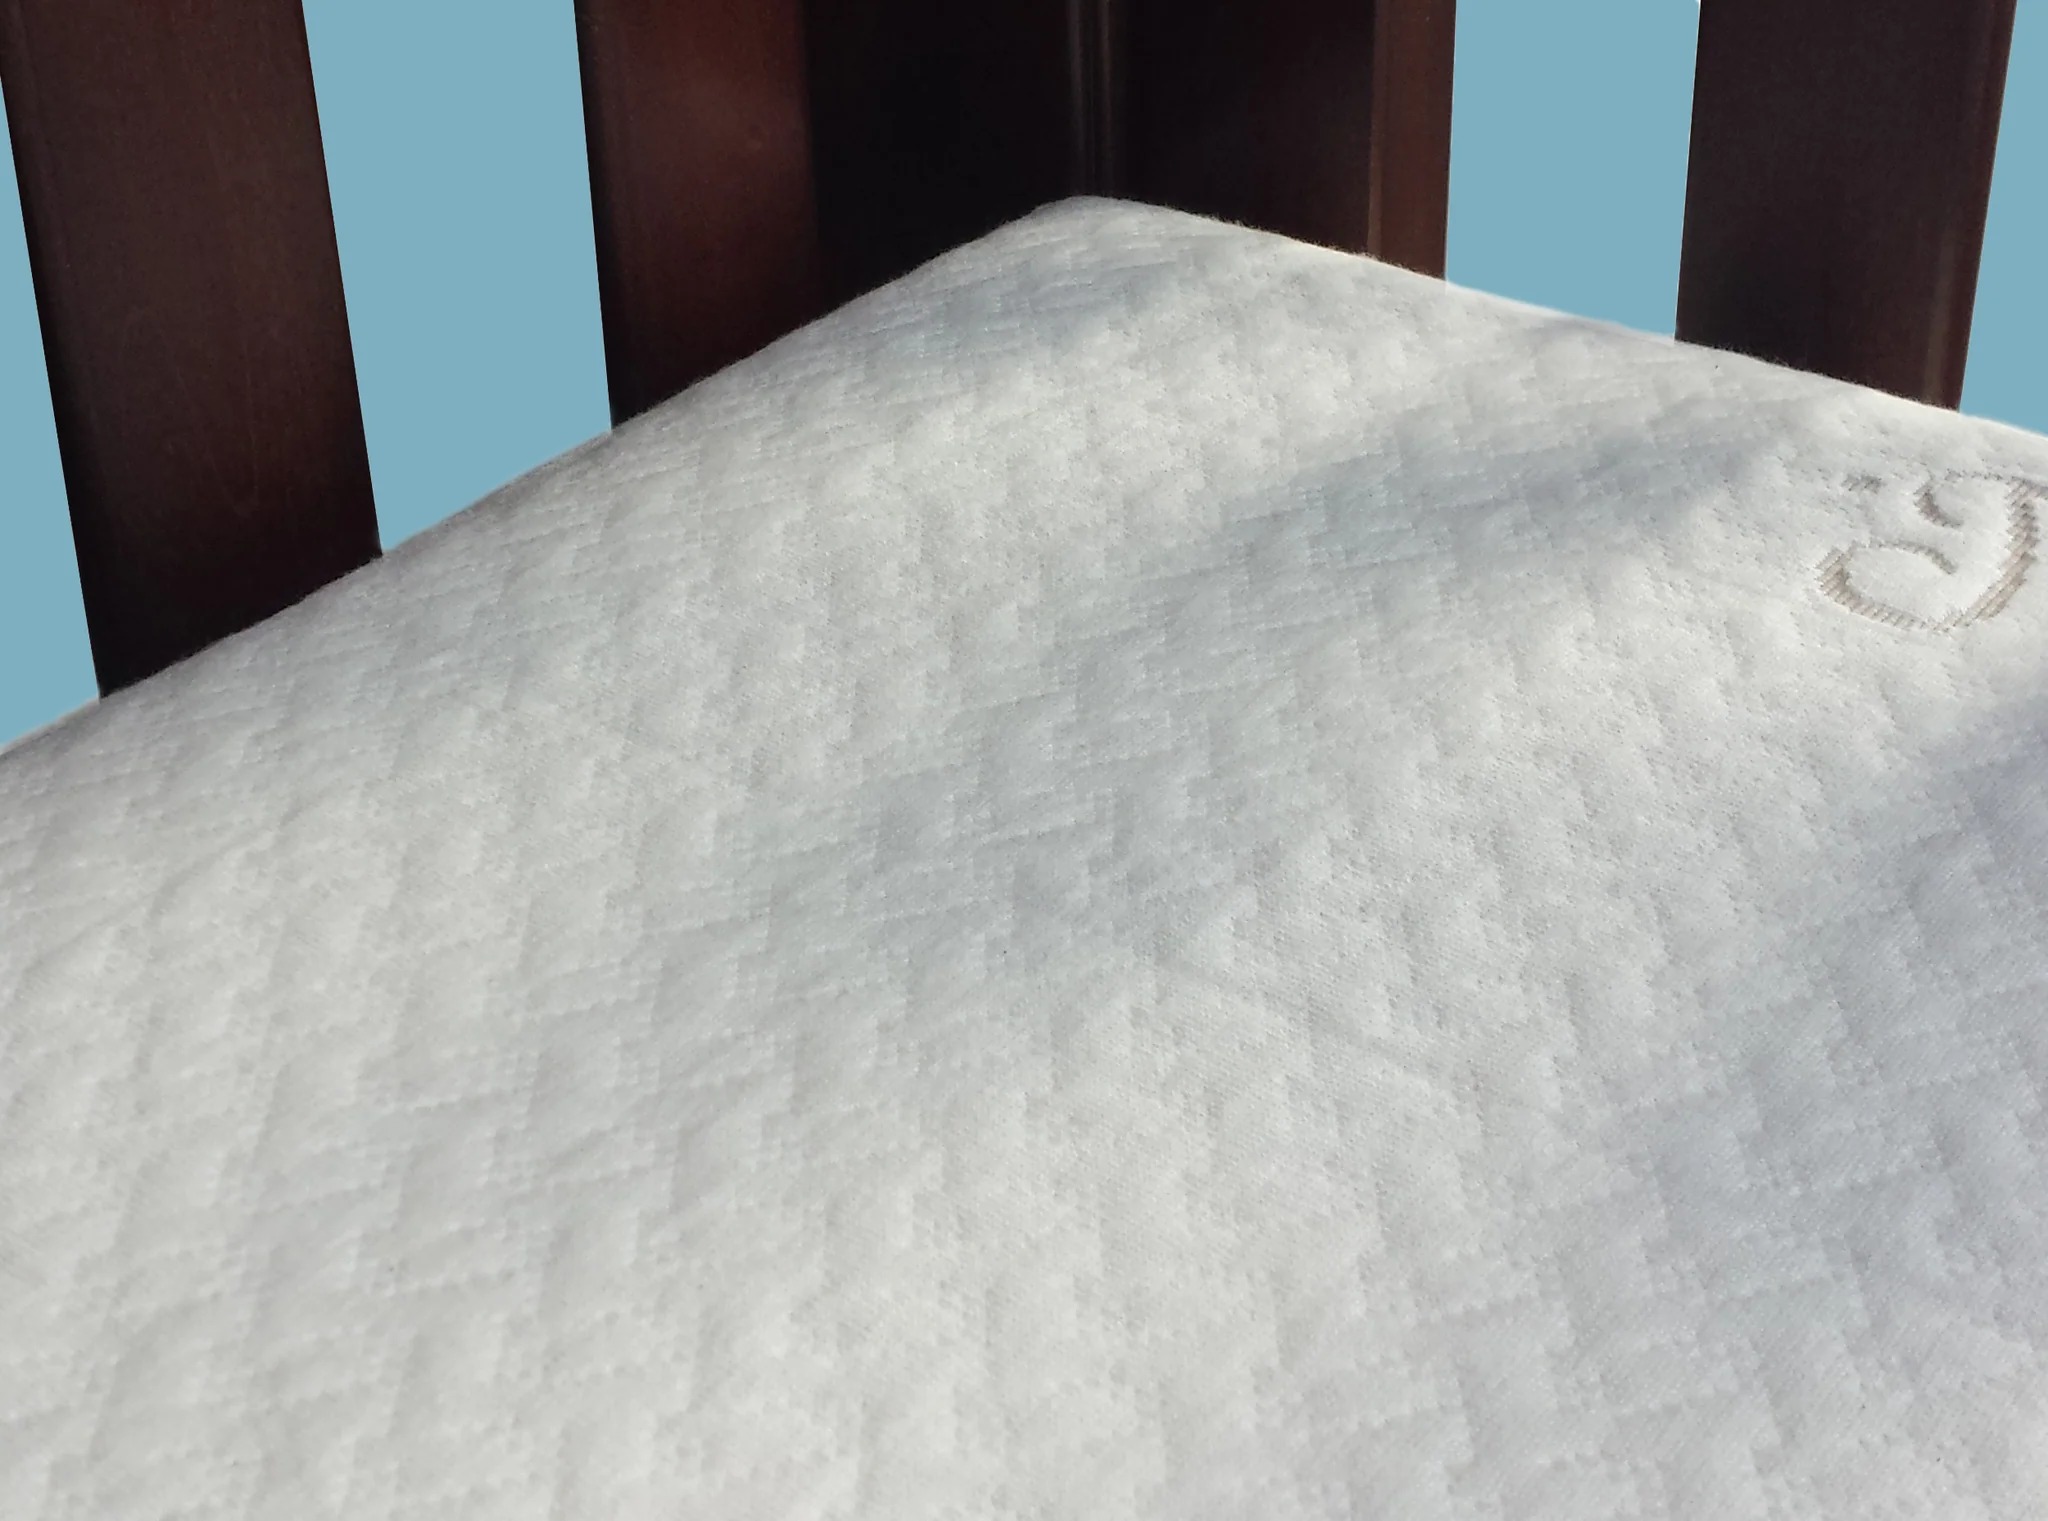 Moonlight Baby Premium Cotton Waterproof Crib Mattress Cover